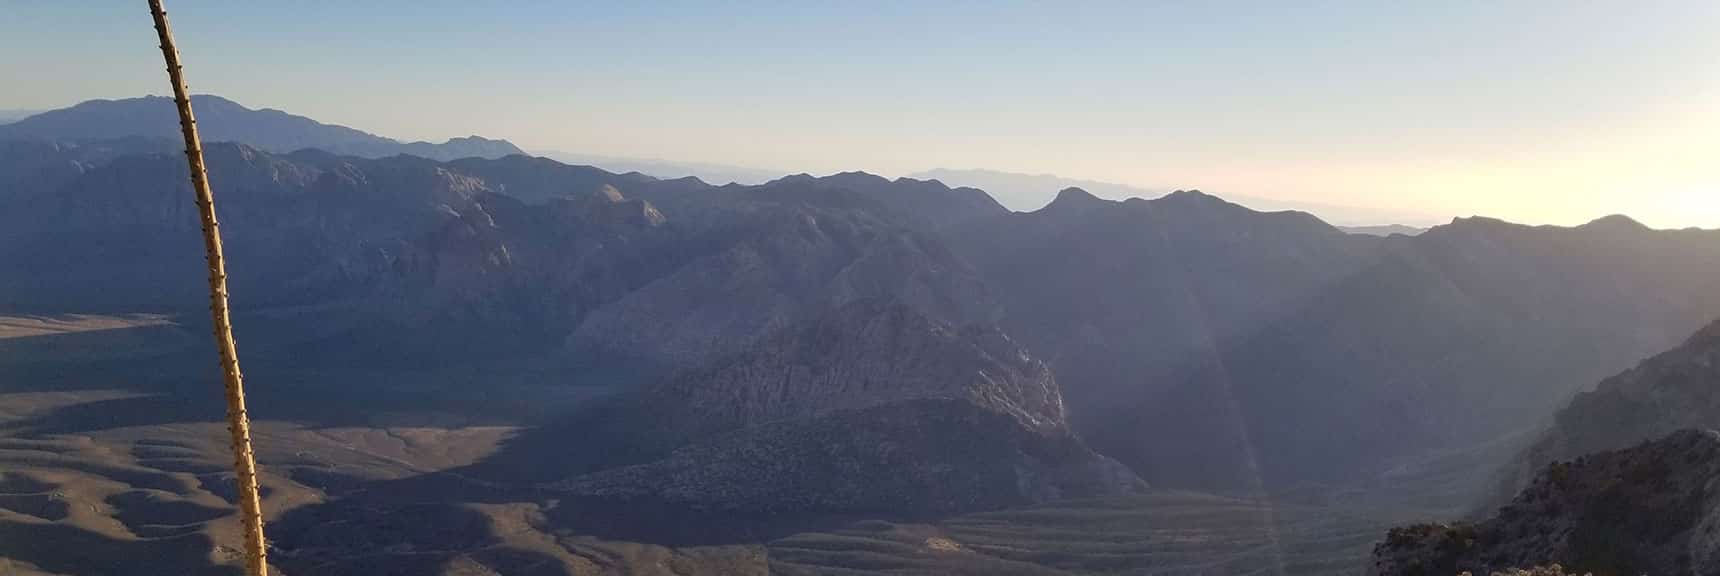 White Rock Mt, Rainbow Mts, Potosi Mt...Sun is Setting, Still on El Padre Mt Summit! | La Madre Mountain,, El Padre Mountain, Burnt Peak | La Madre Mountains Wilderness, Nevada